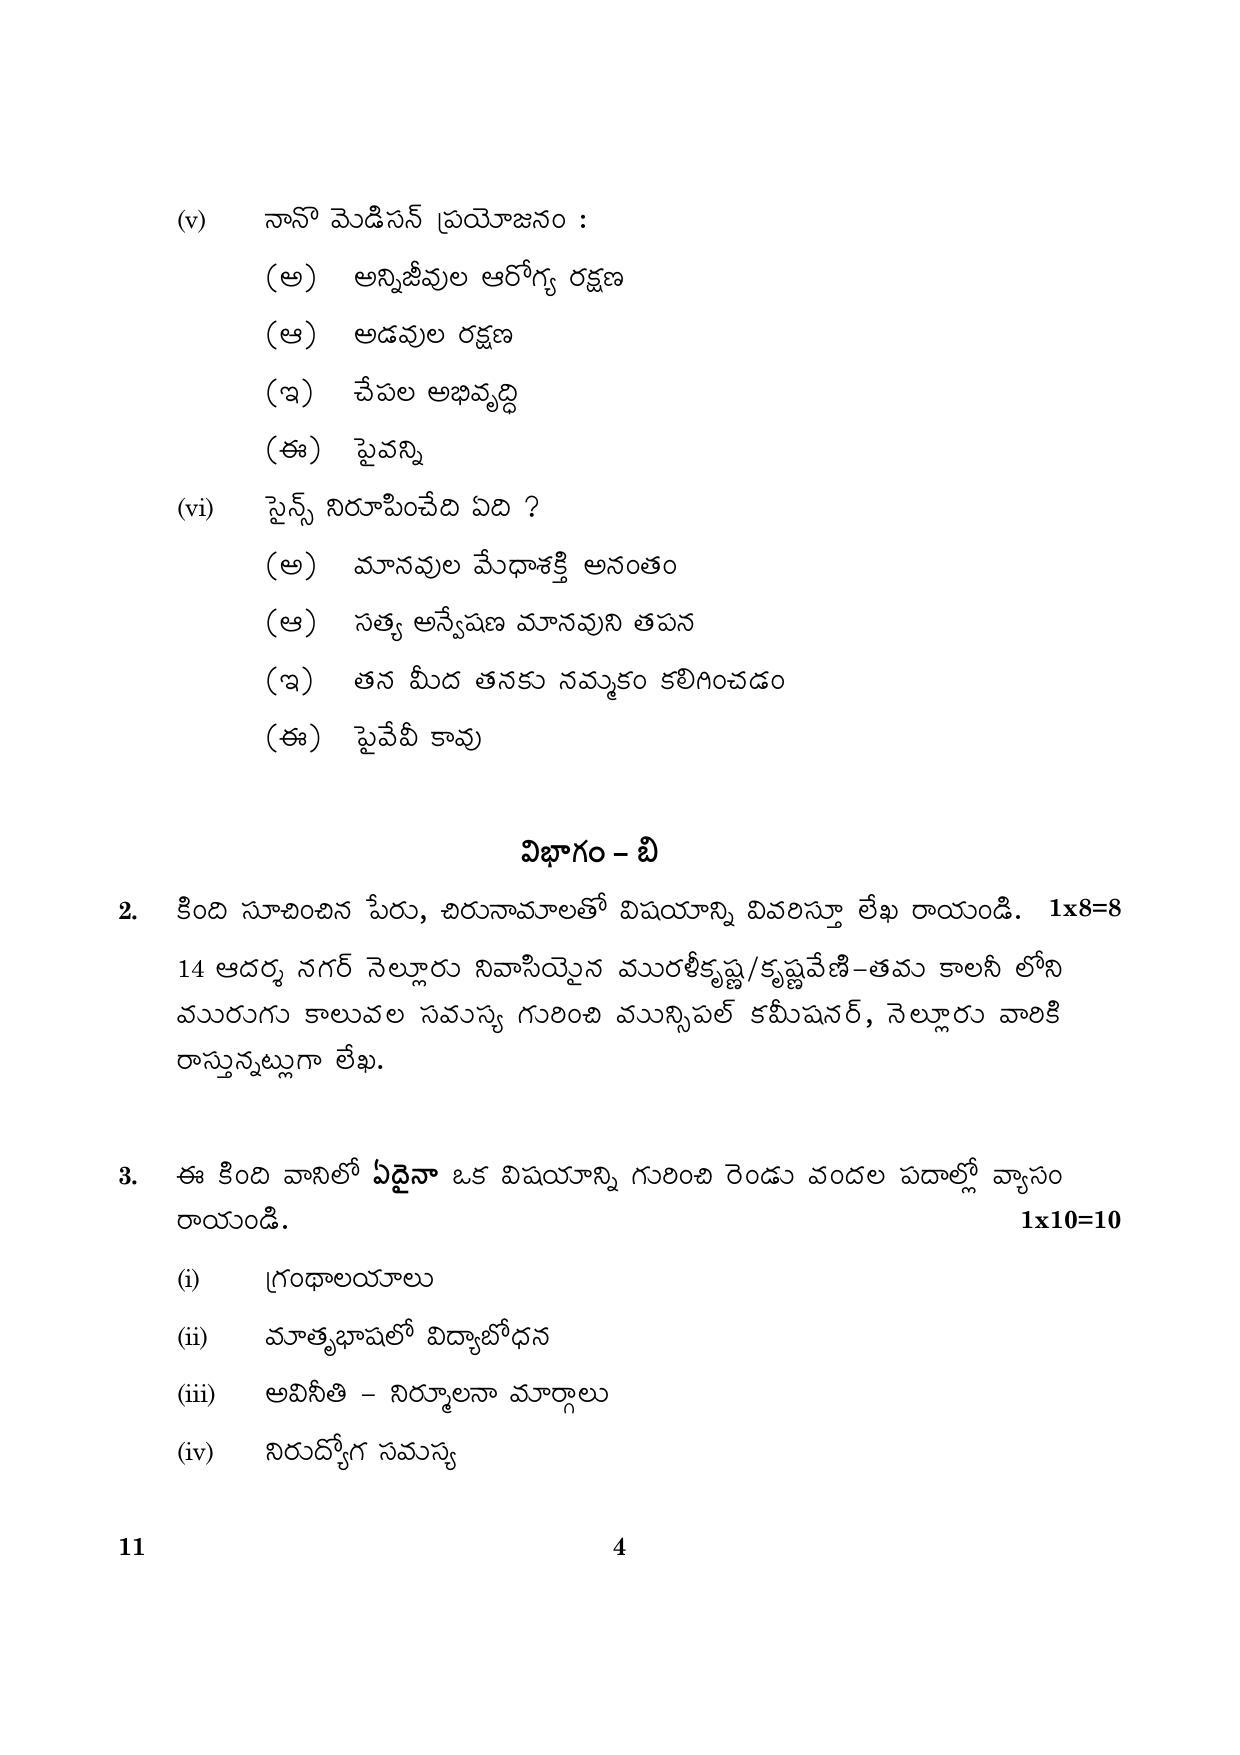 CBSE Class 10 011 Telugu 2016 Question Paper - Page 4